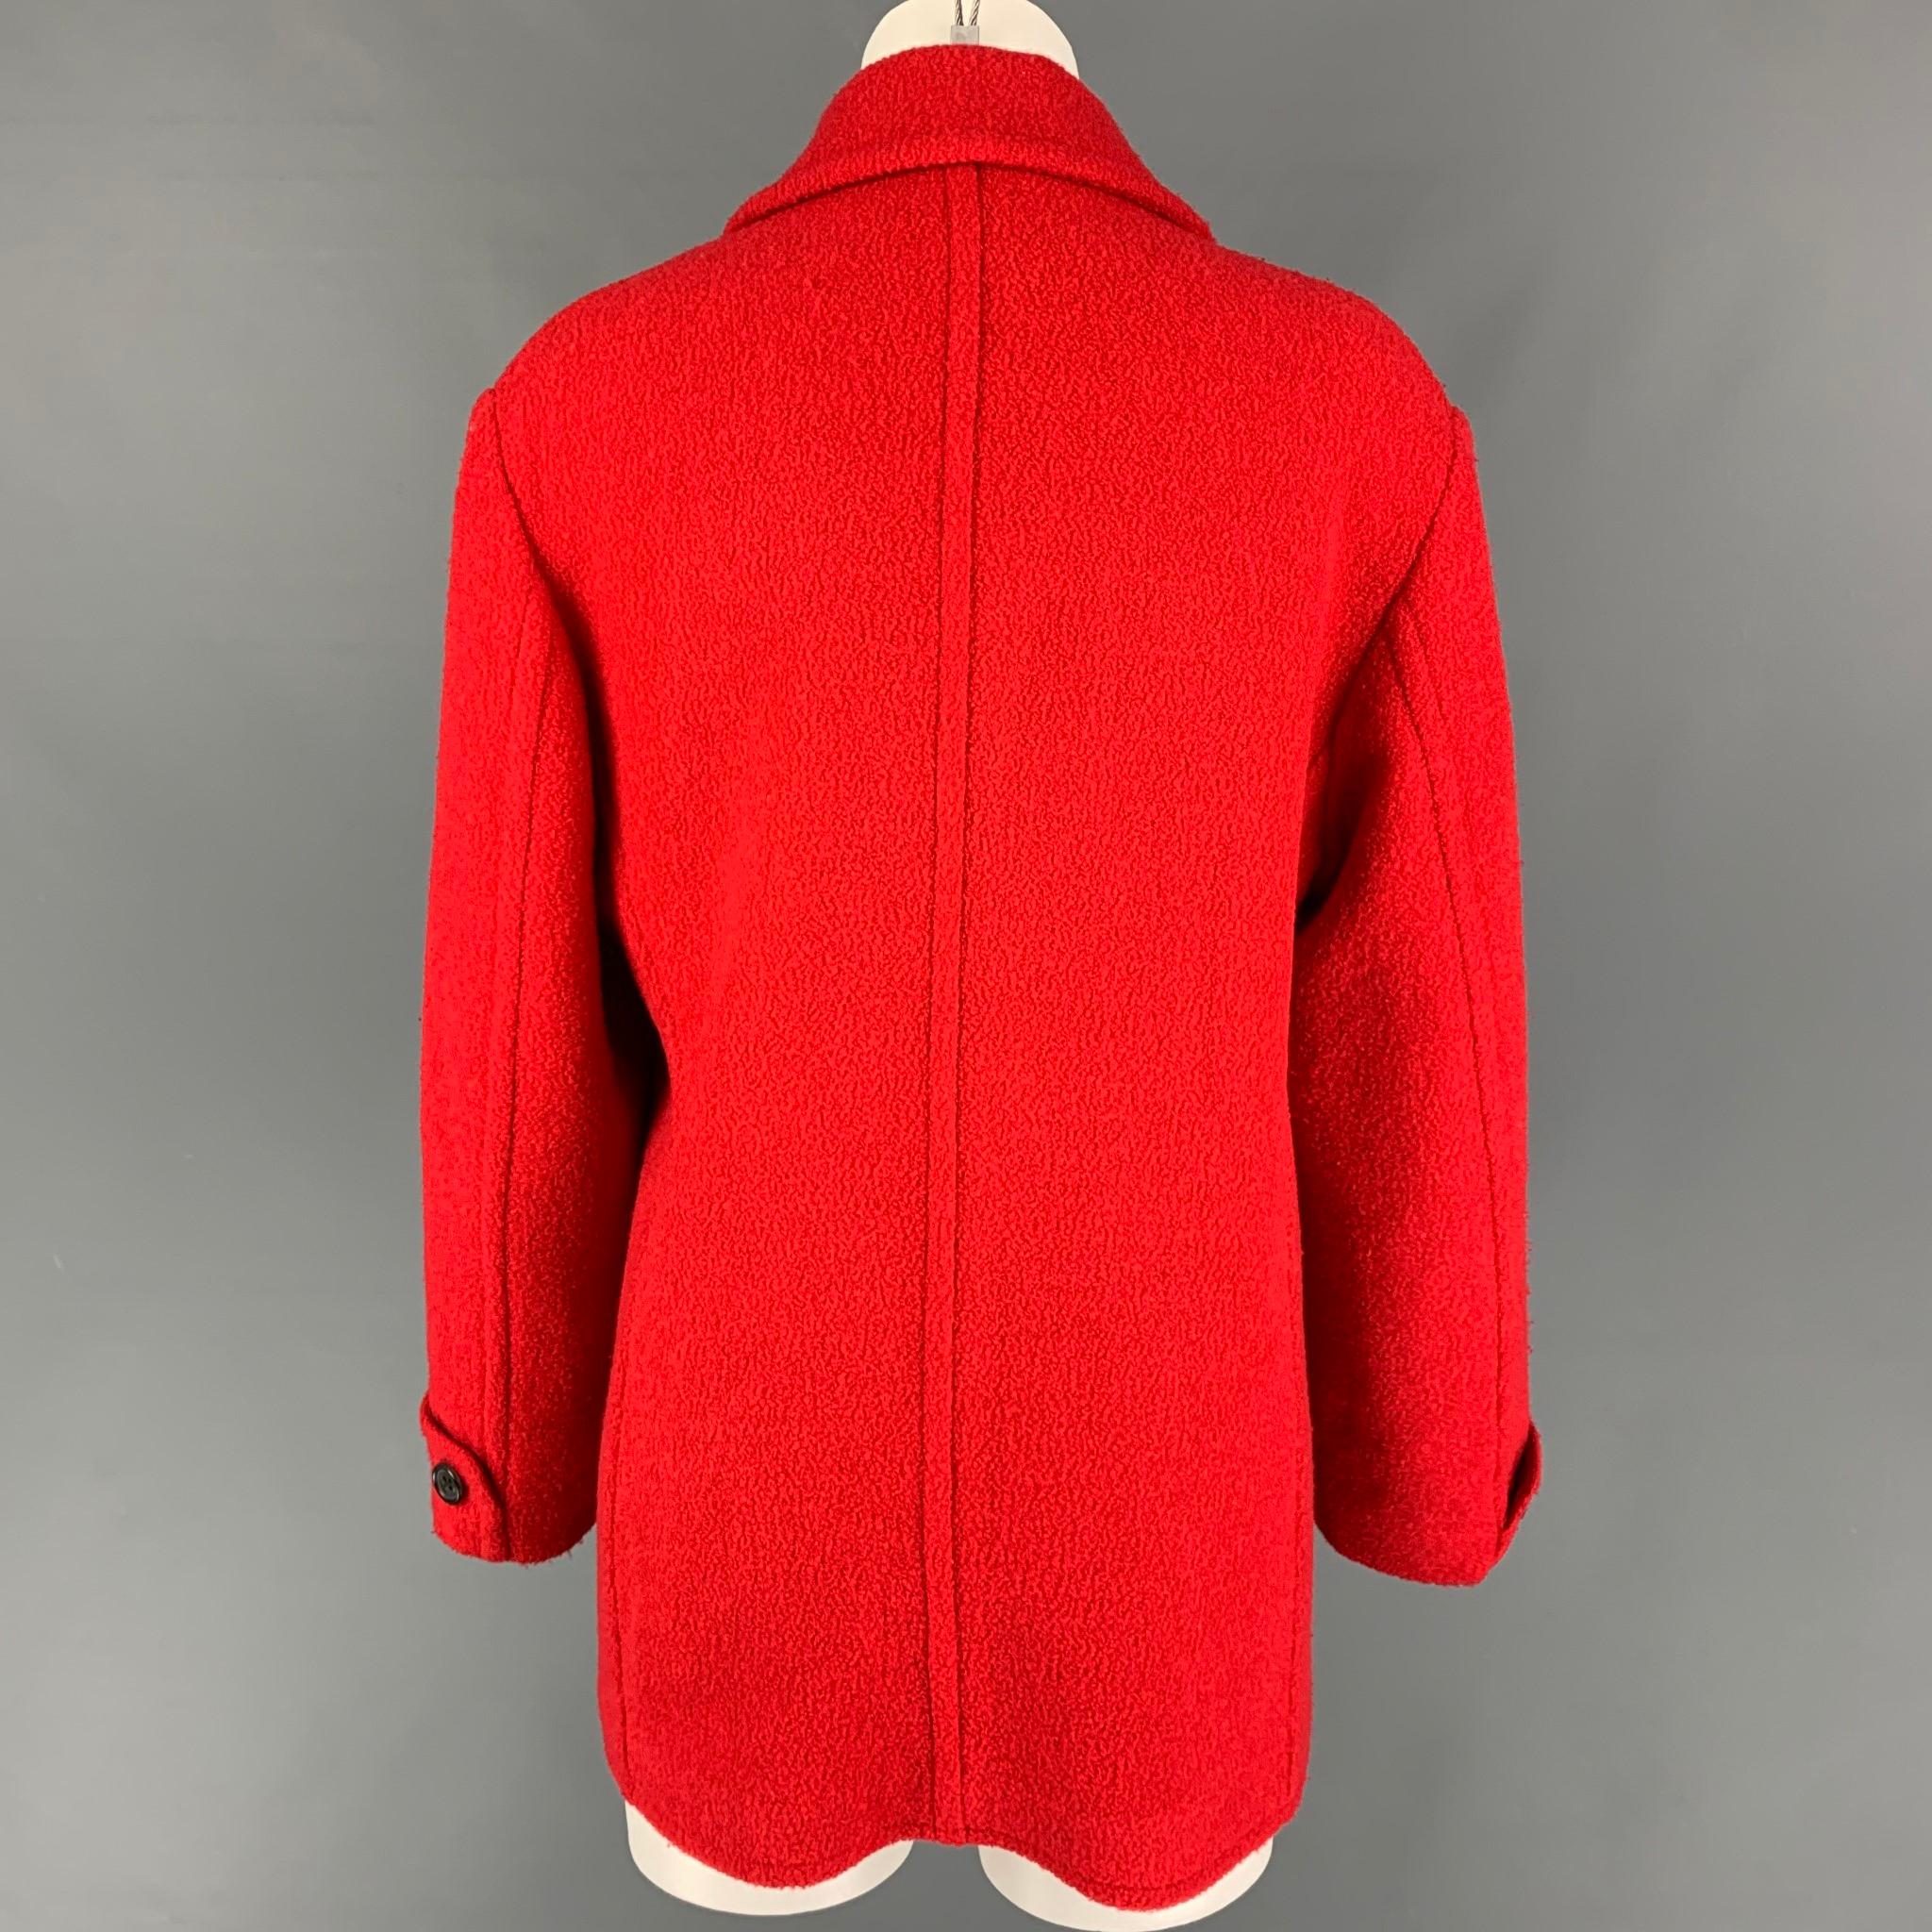 red wool peacoat